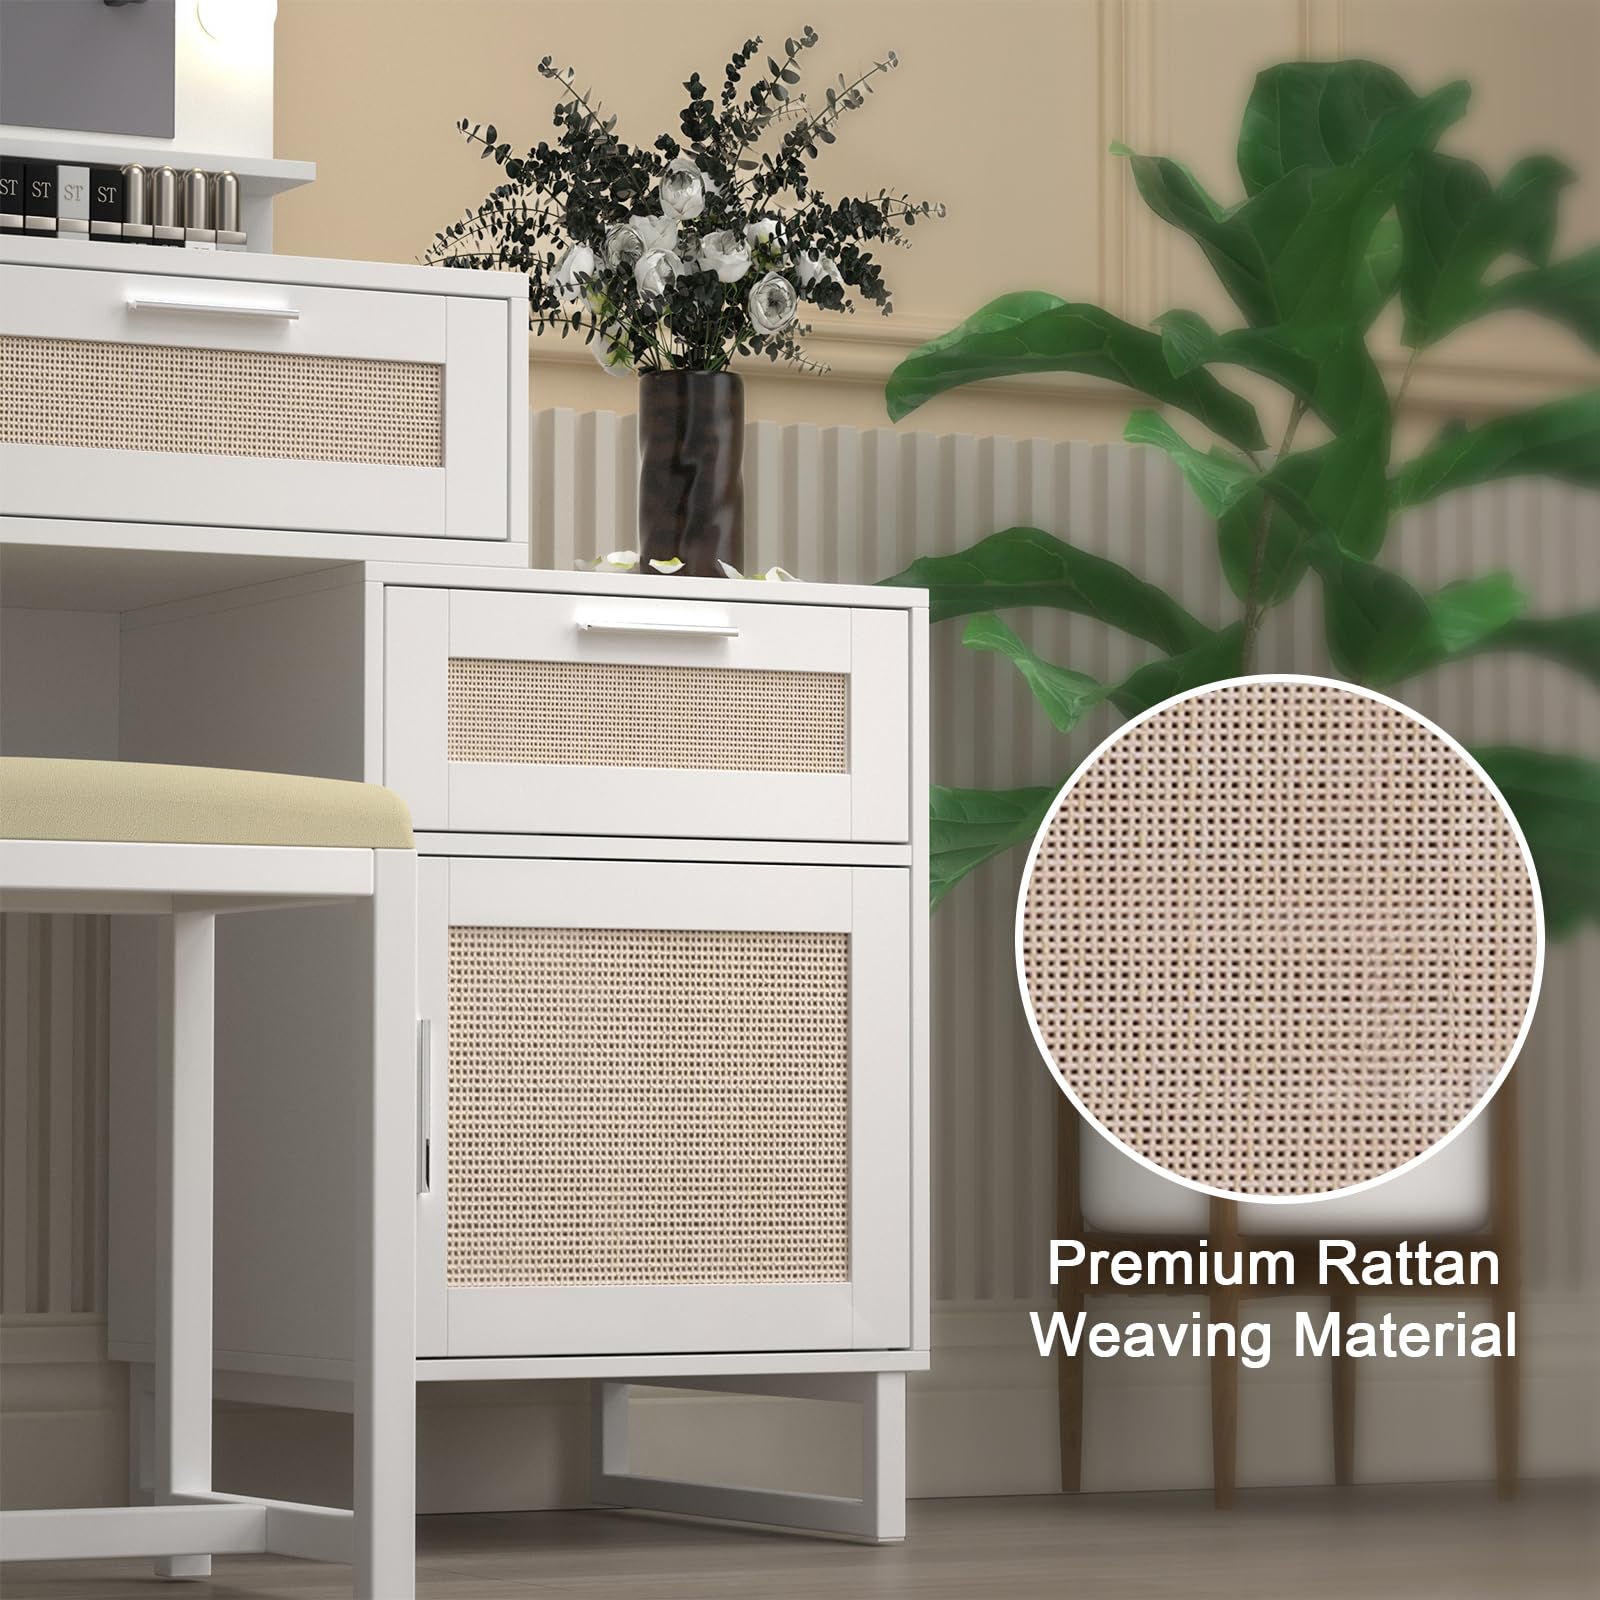 White and Rattan Vanity Table Set IF007 has premium rattan weaving material